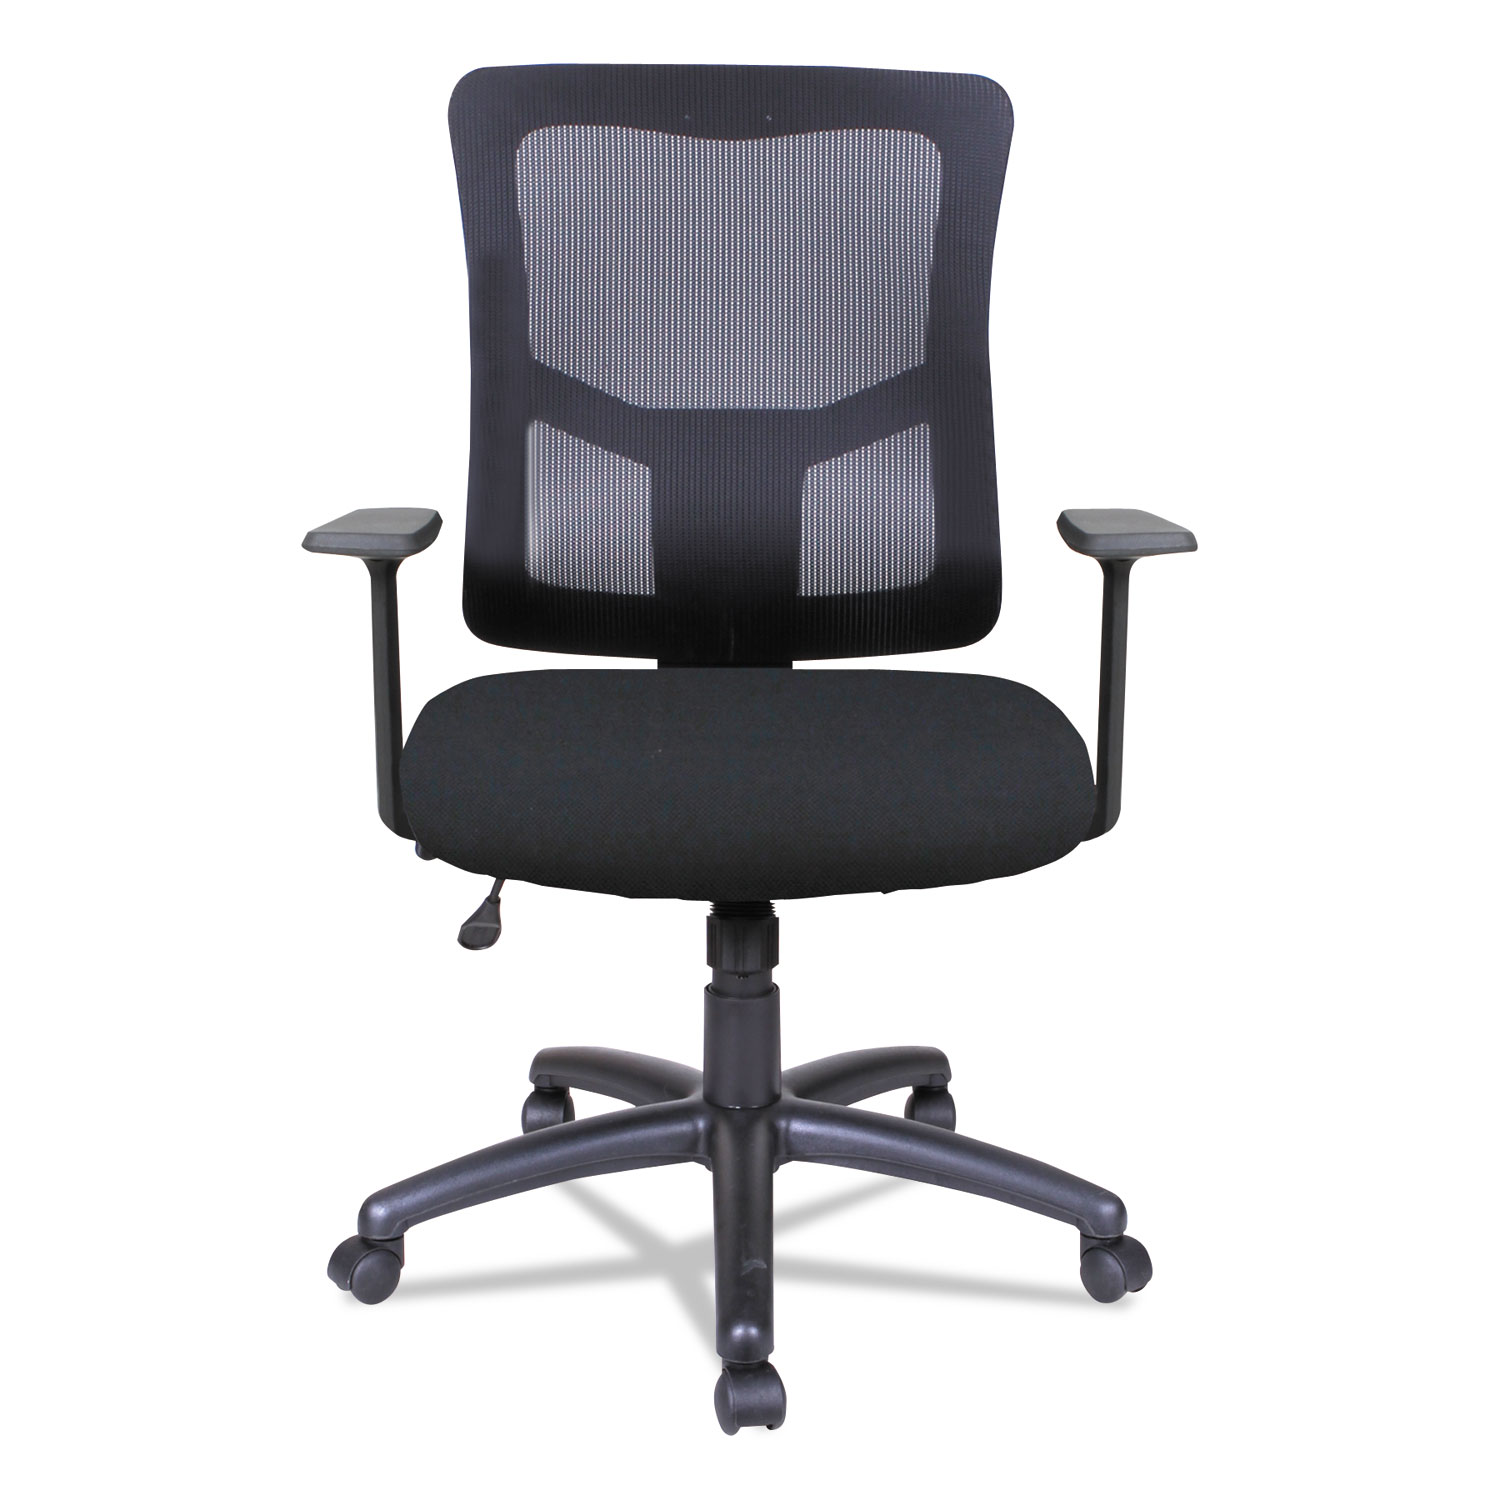 Alera Elusion II Series Mesh Mid-Back Swivel/Tilt Chair, Supports up to 275 lbs., Black Seat/Black Back, Black Base